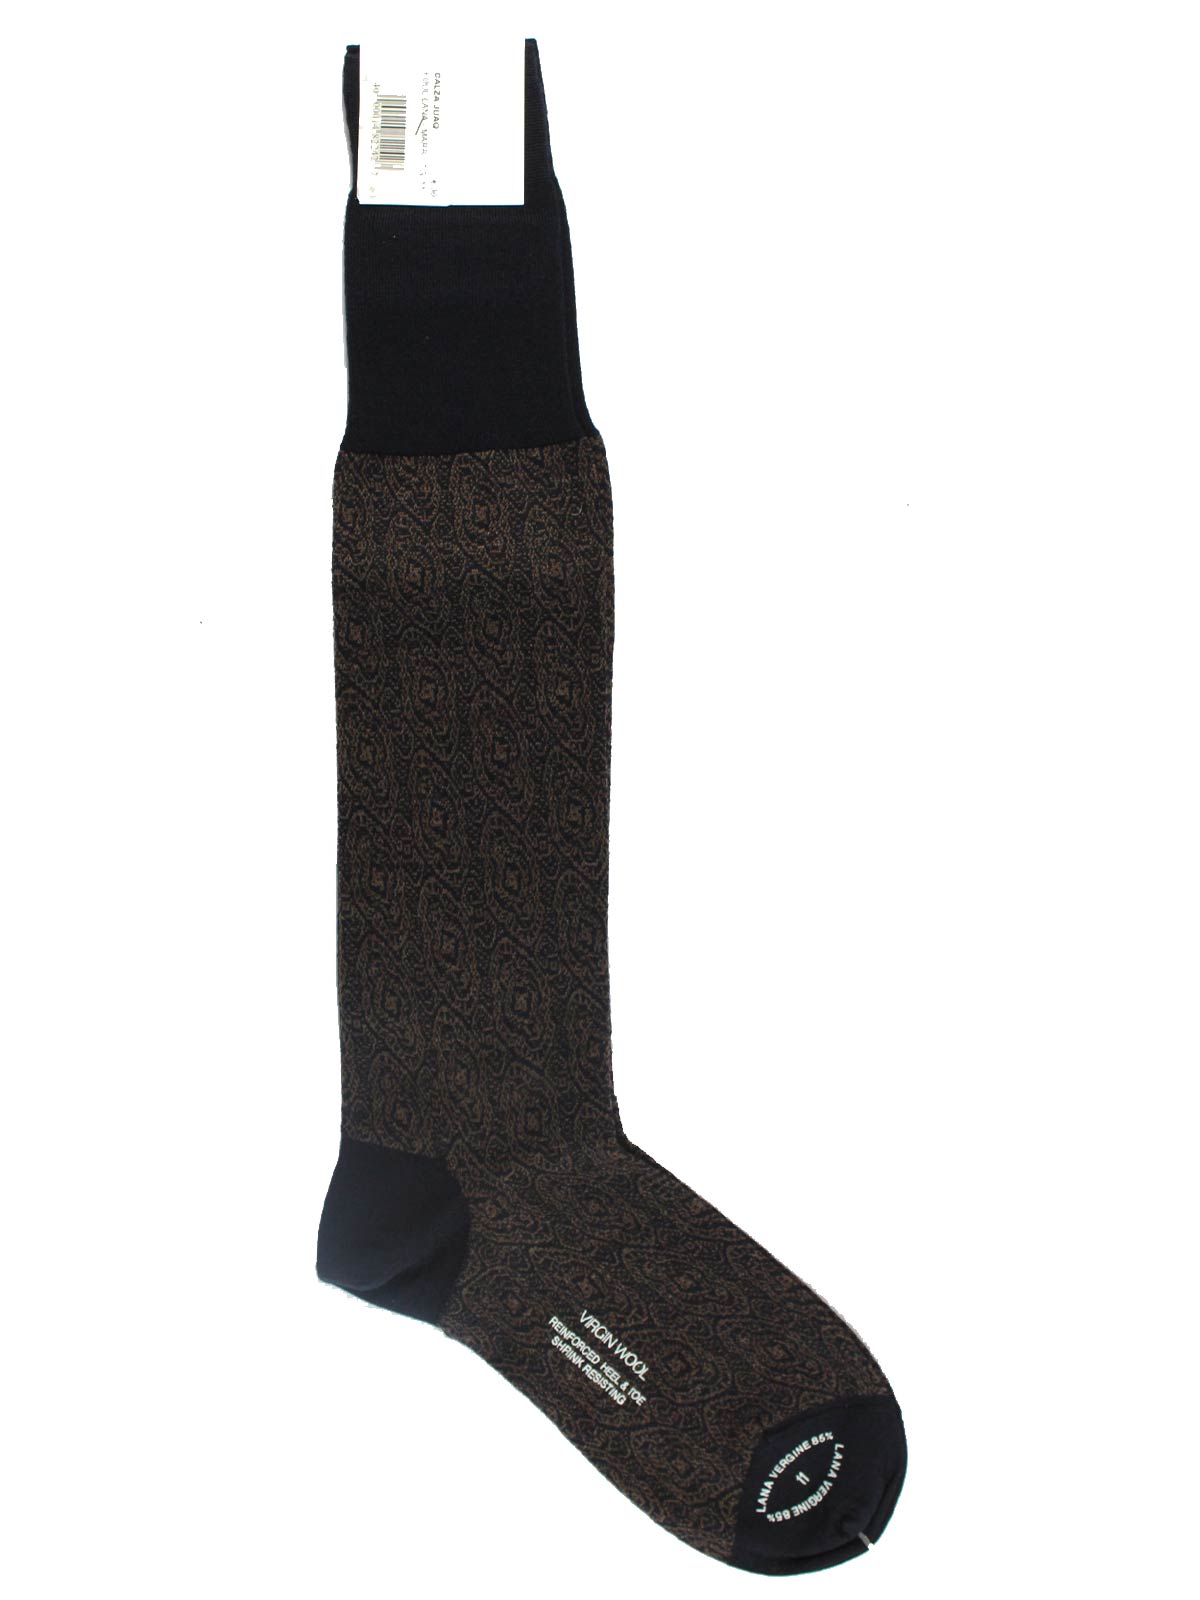 Cesare Attolini Wool Socks US 11.5 / EUR 45 Brown Black Ornamental - Over The Calf